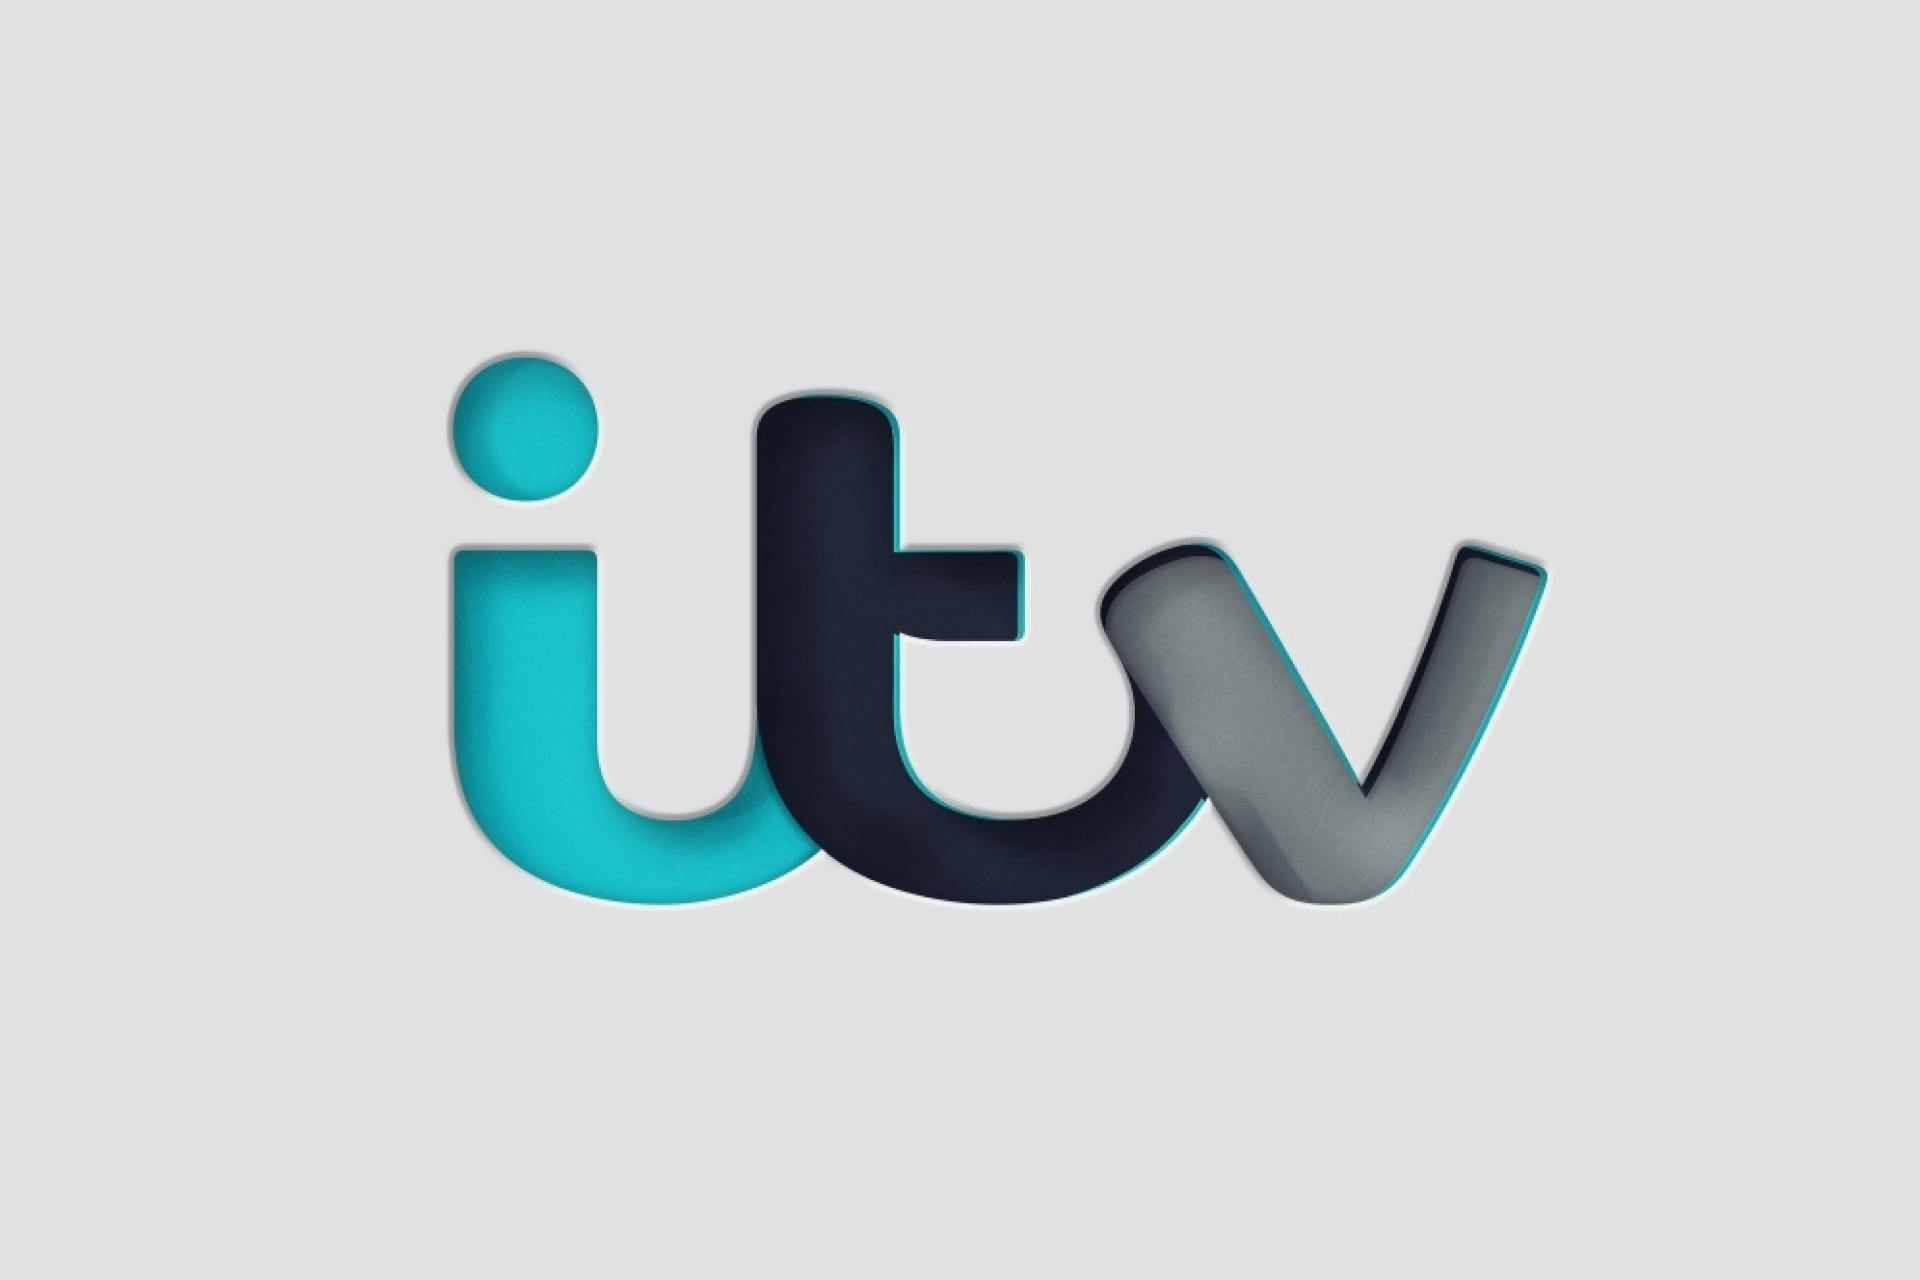 Managing Cloud Migration at ITV